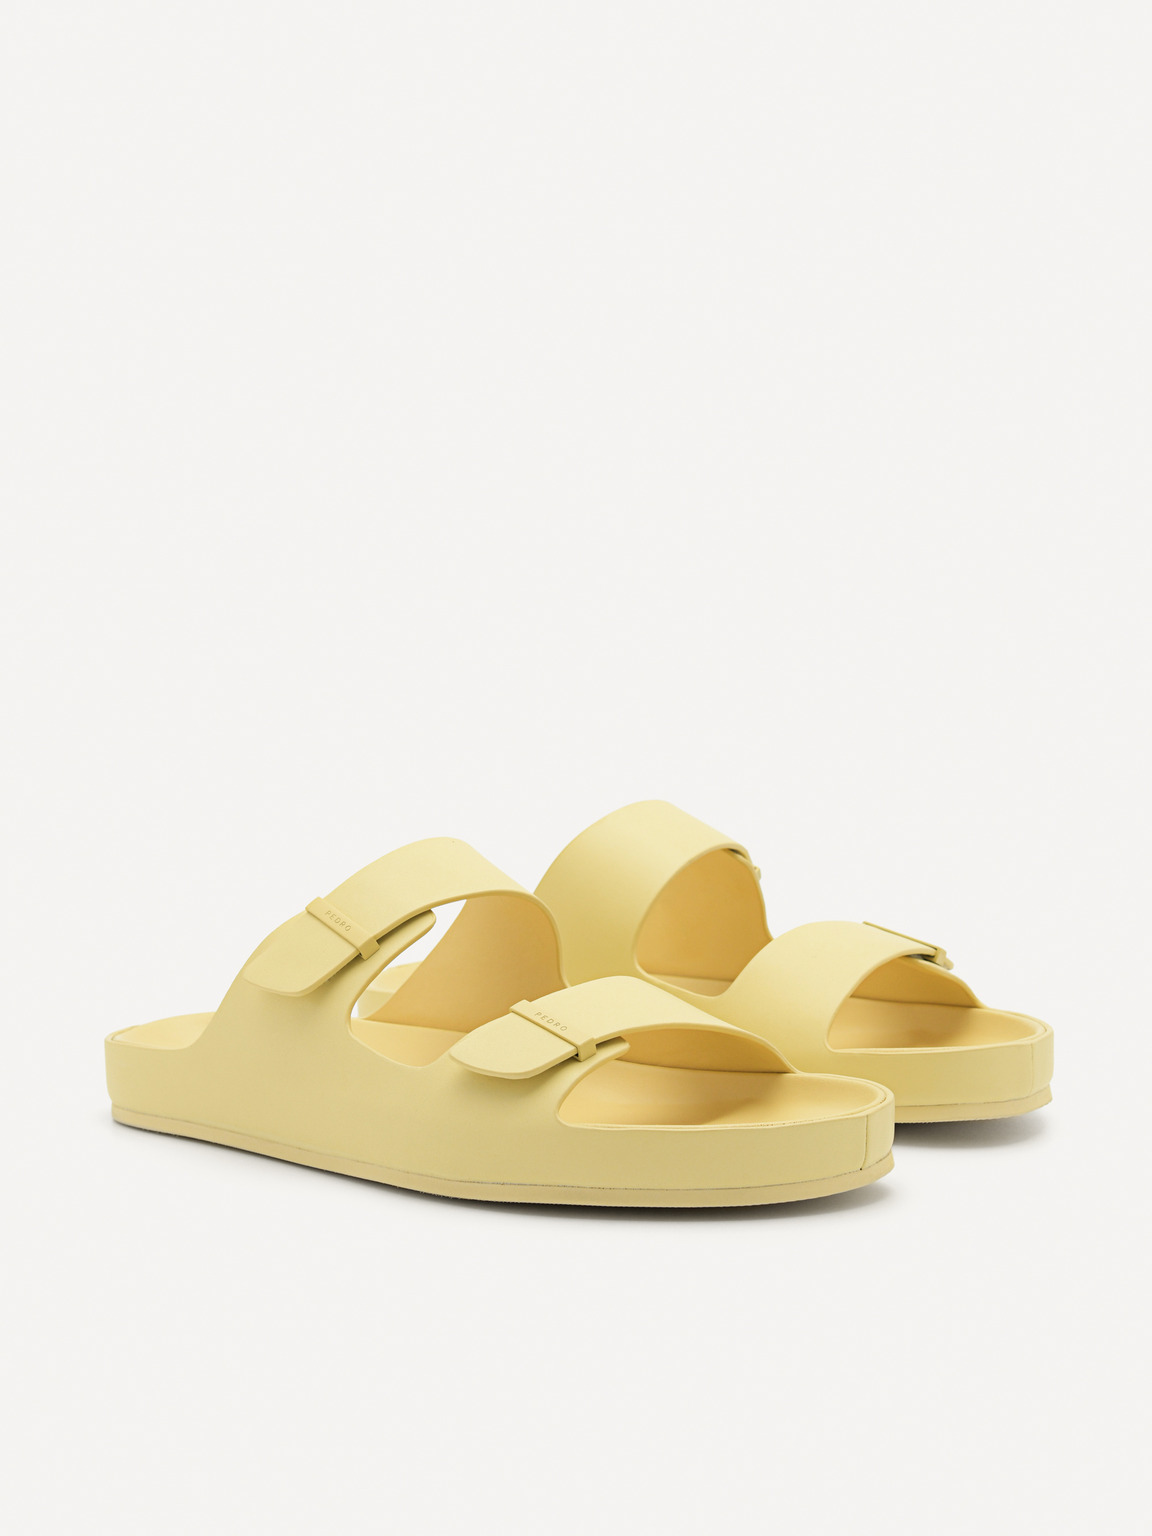 Indy Slide Sandals, Light Yellow